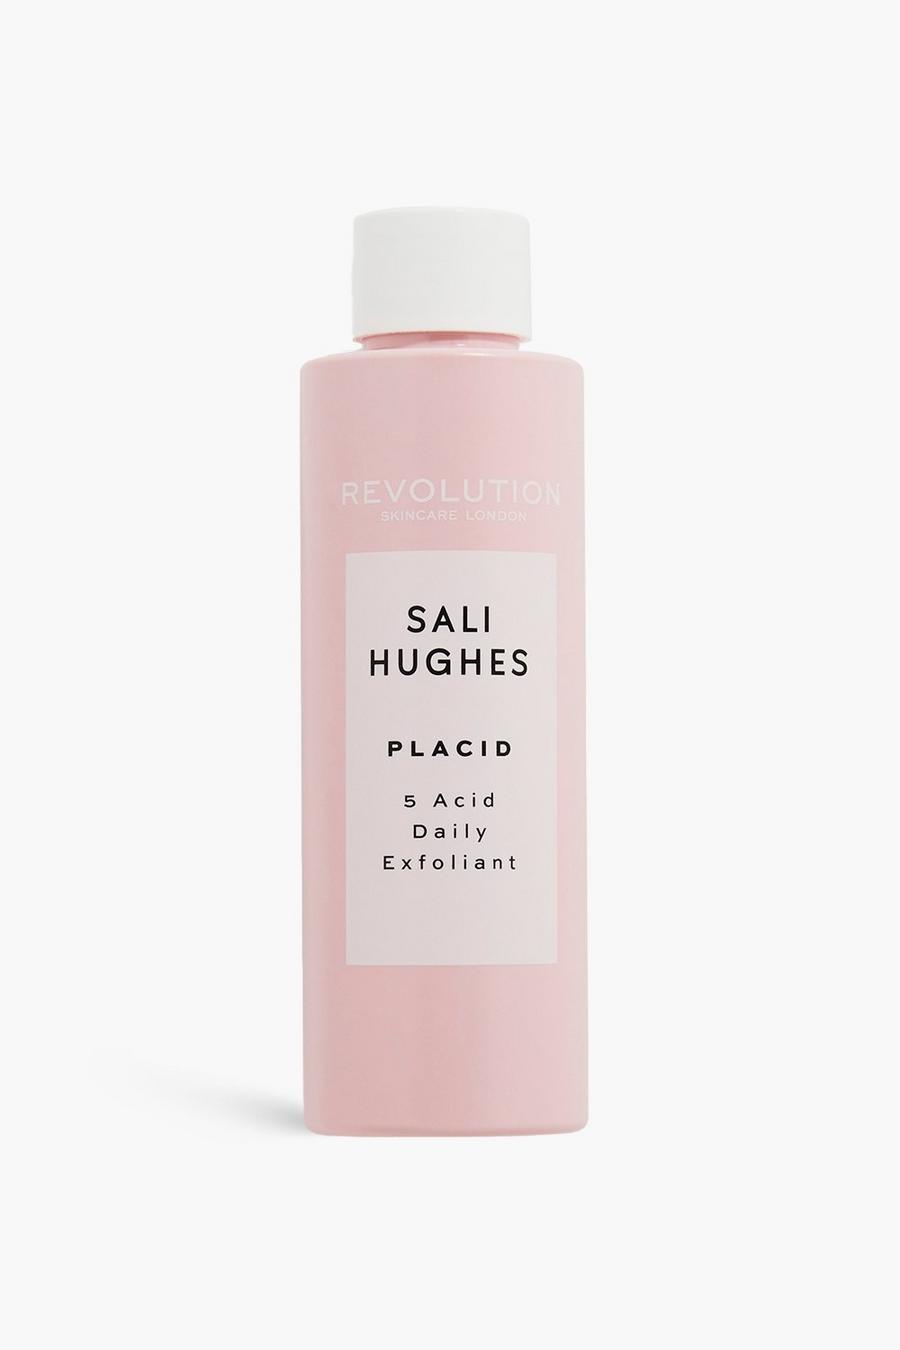 Revolution Skin x Sali Hughes - Exfoliant aux 5 acides, Pink